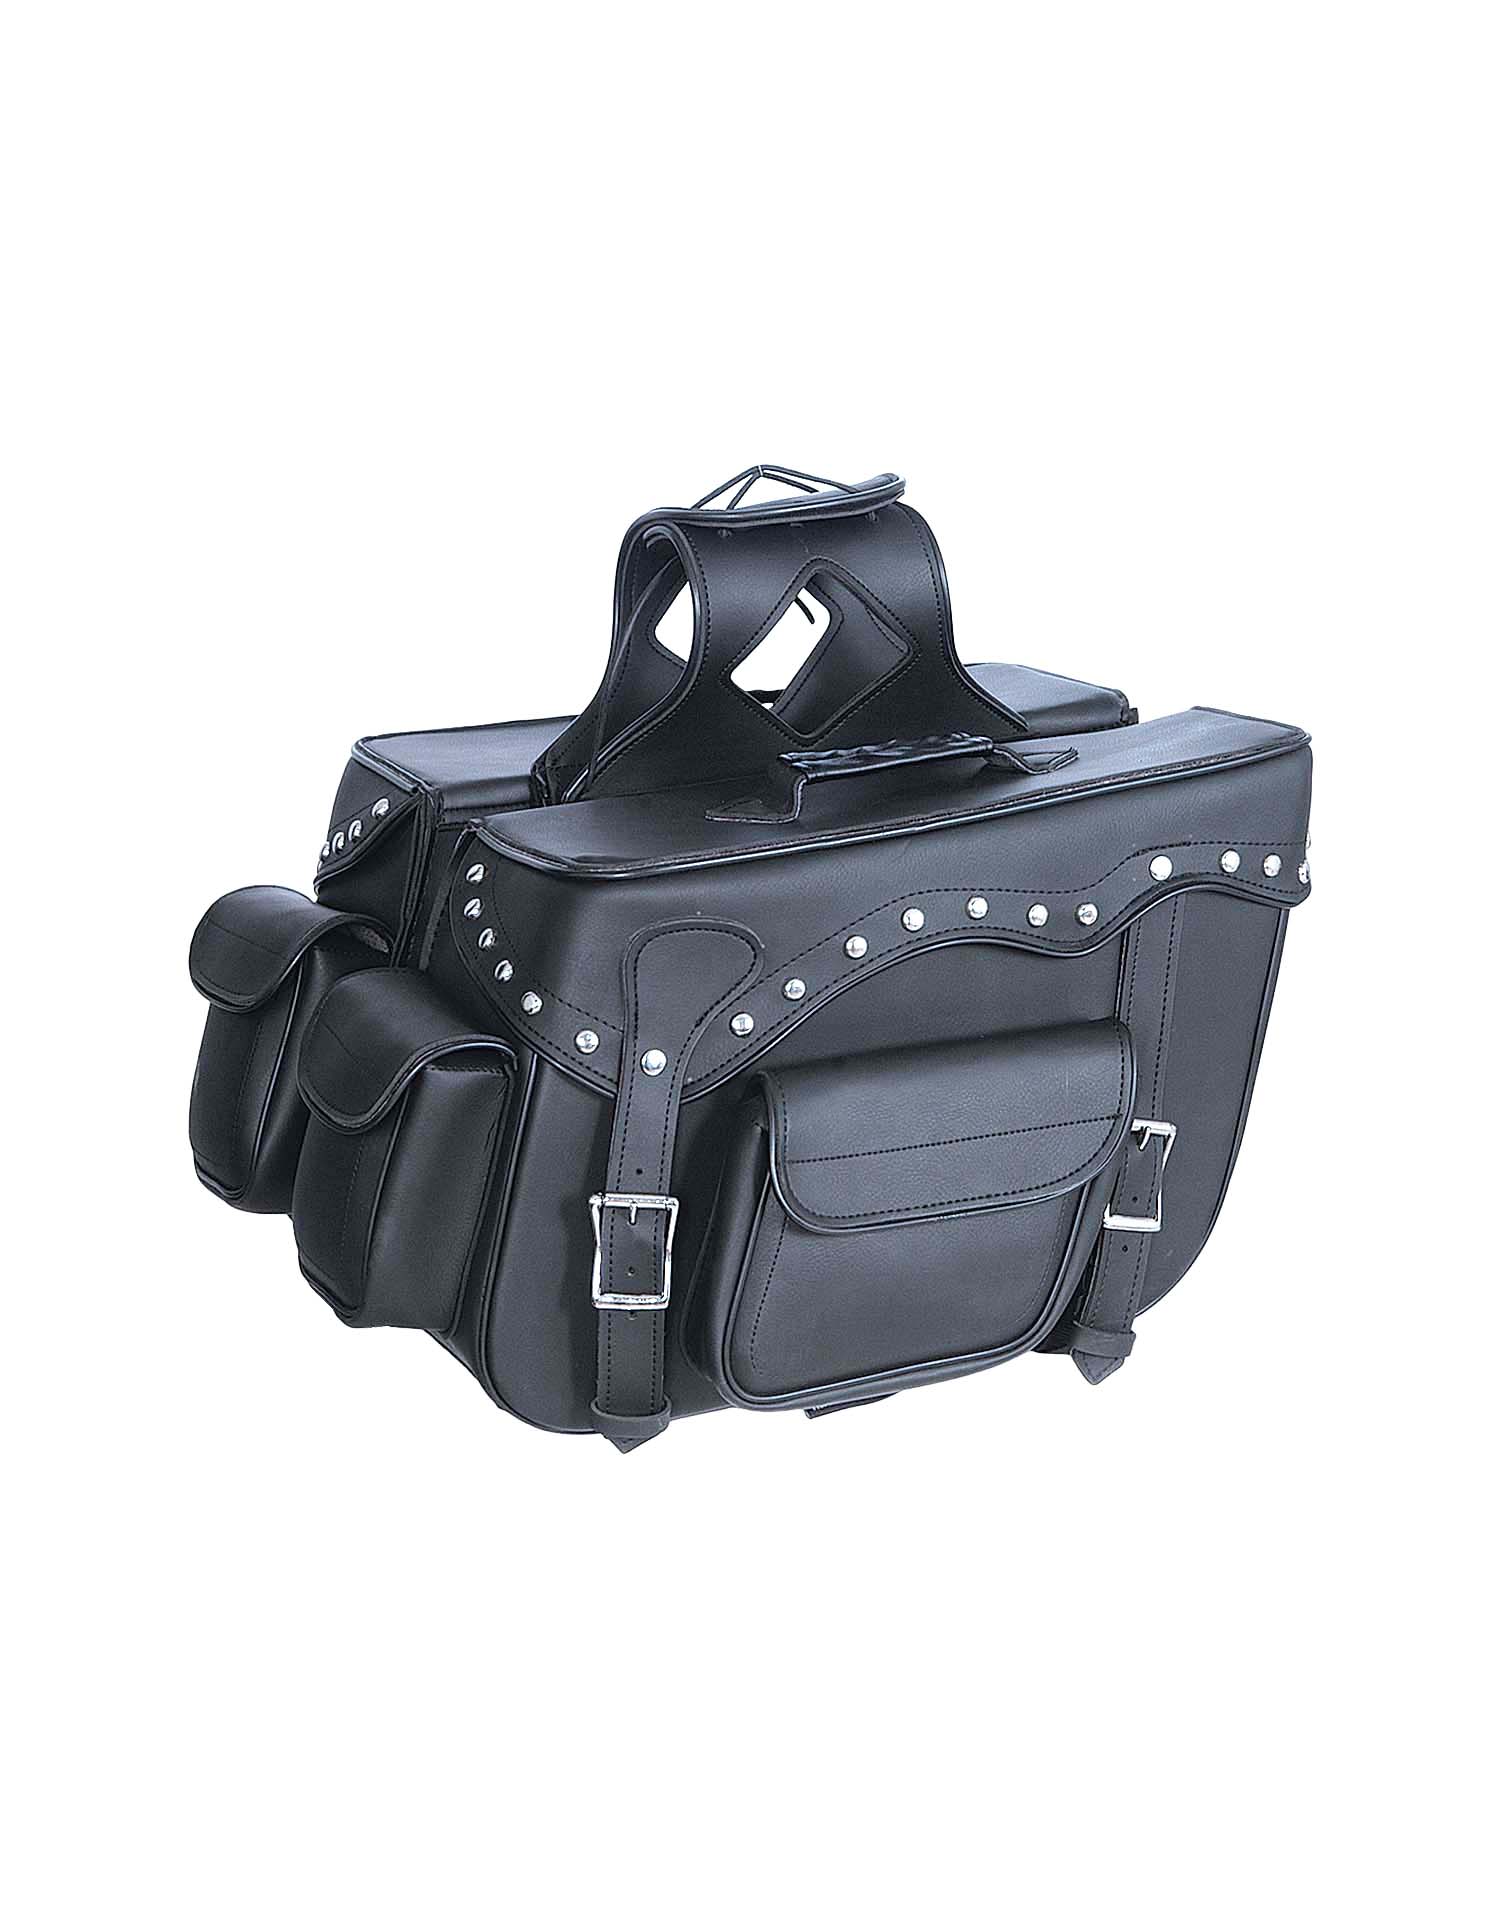 PVC Saddle Bag with Studs & 2 Pockets, 16” x 10” x 6”